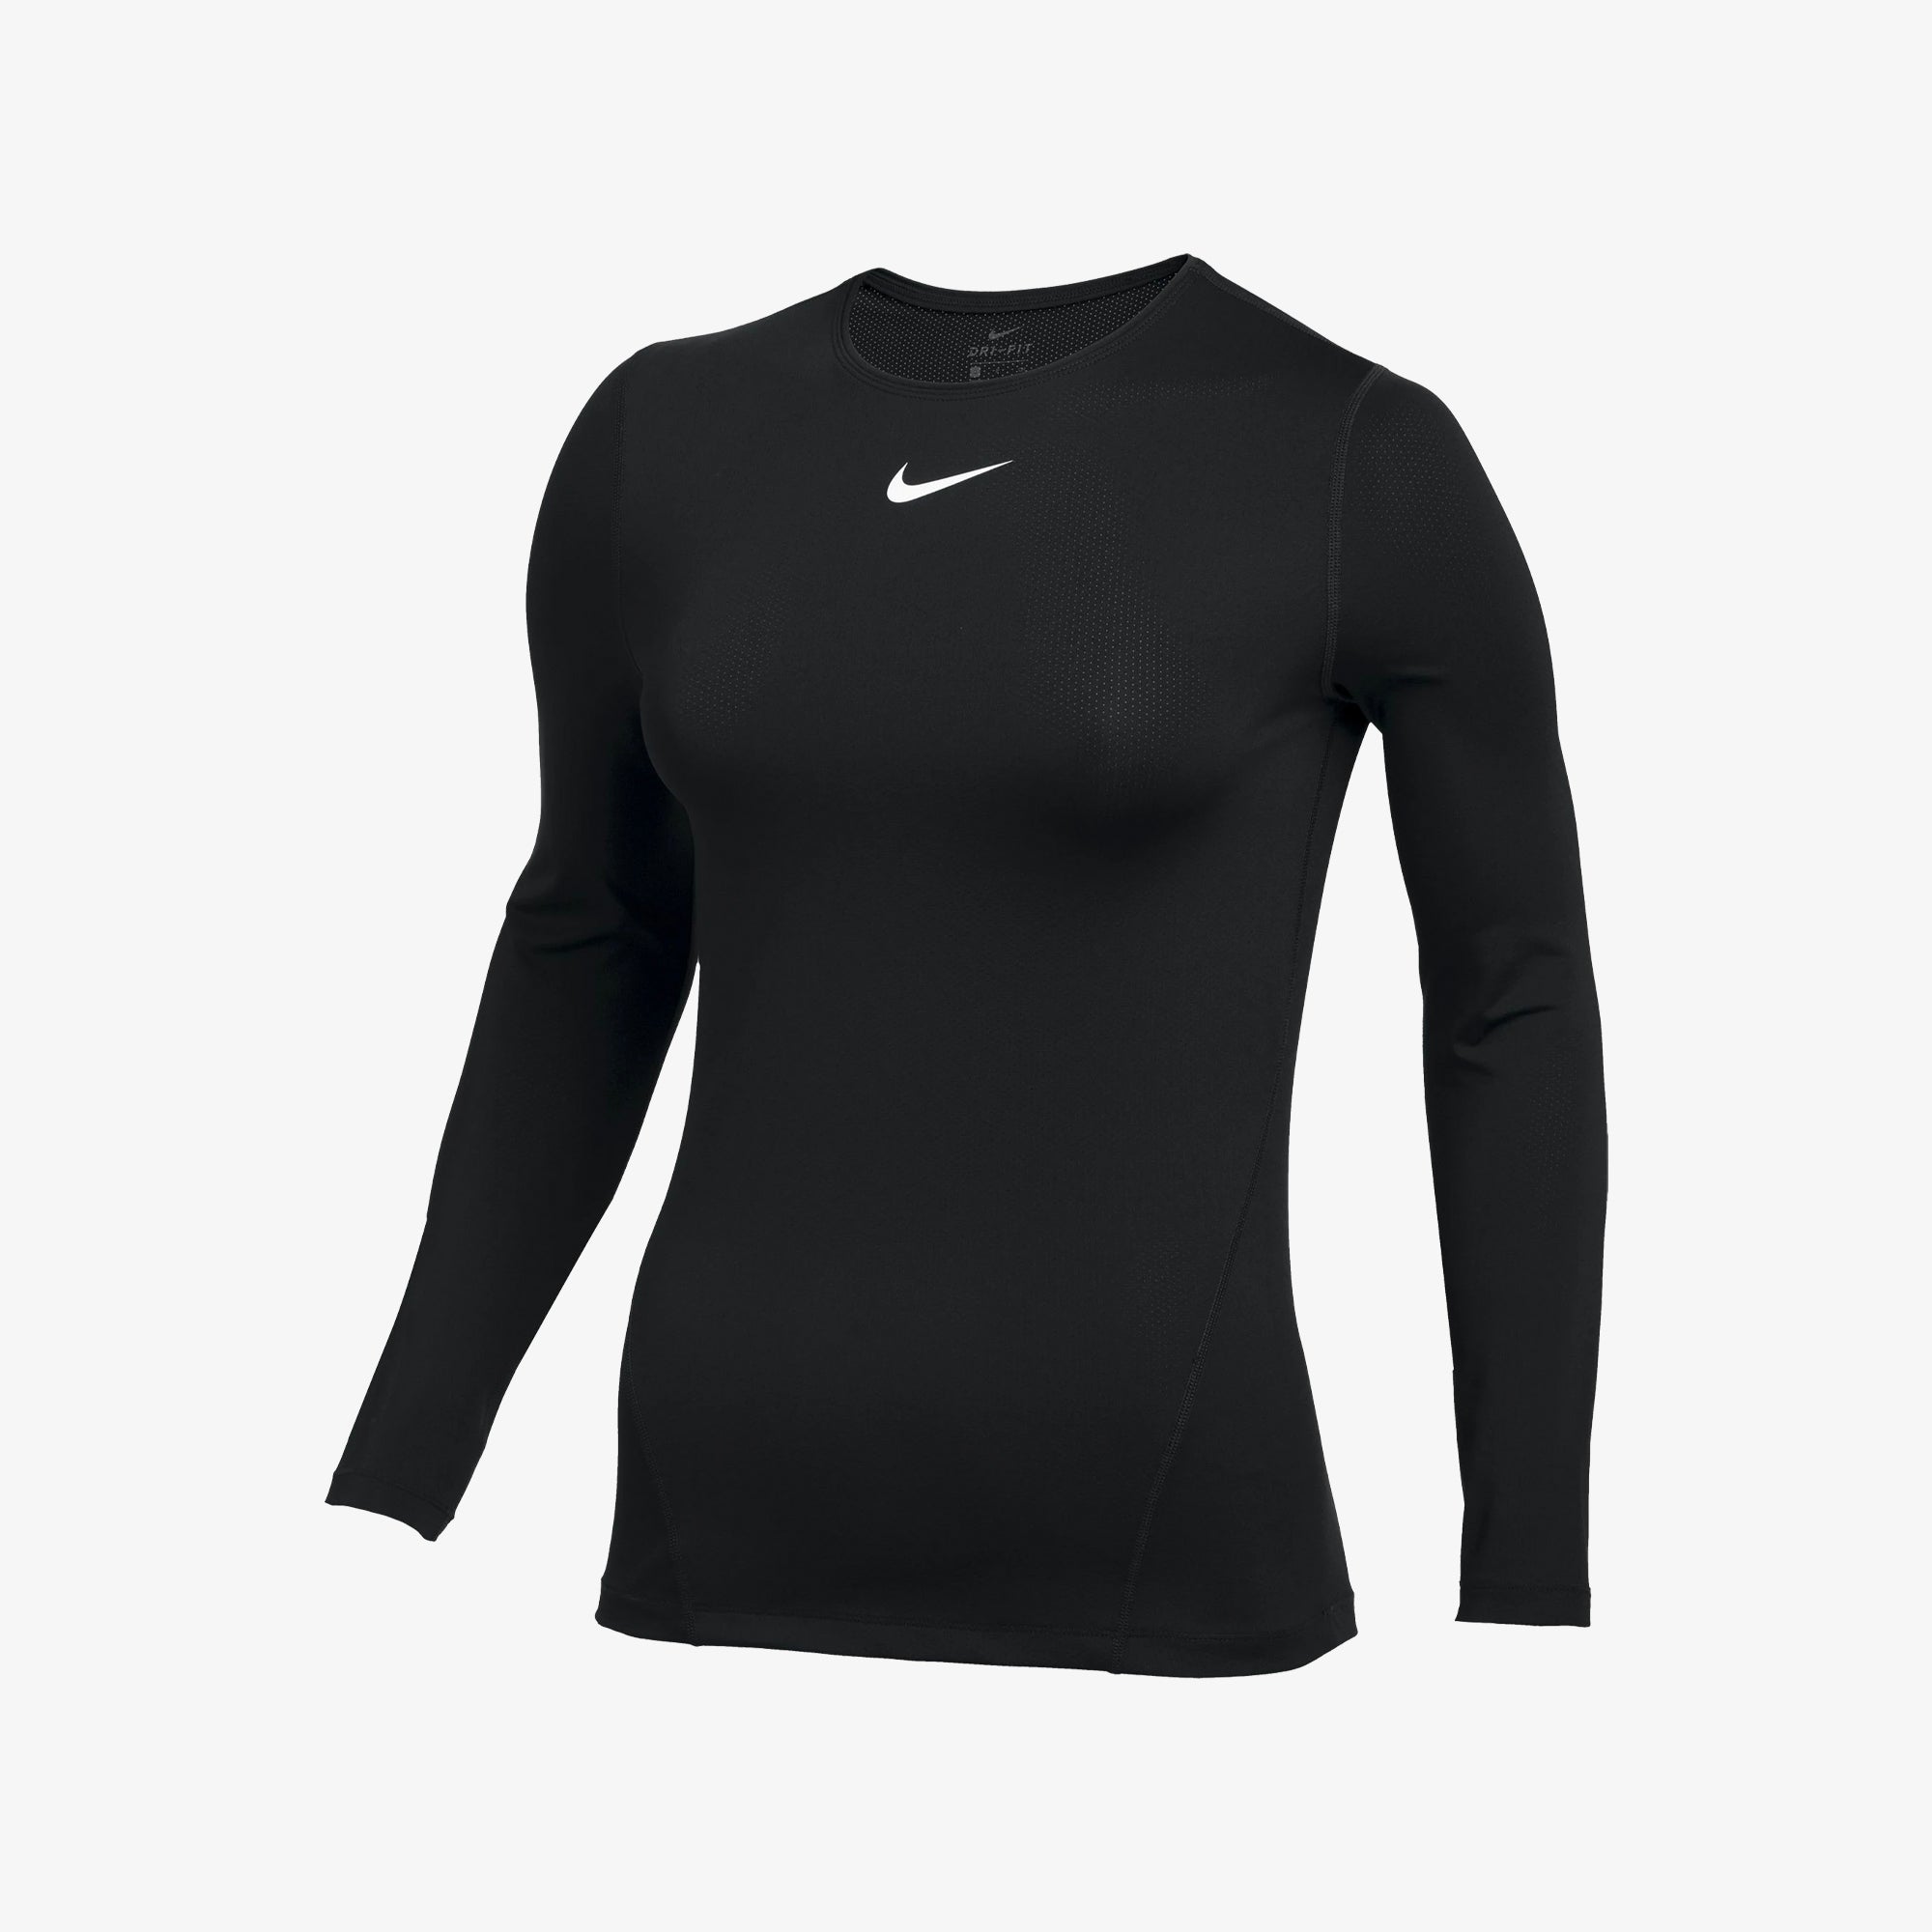 Womens Nike Pro Tops & T-Shirts.